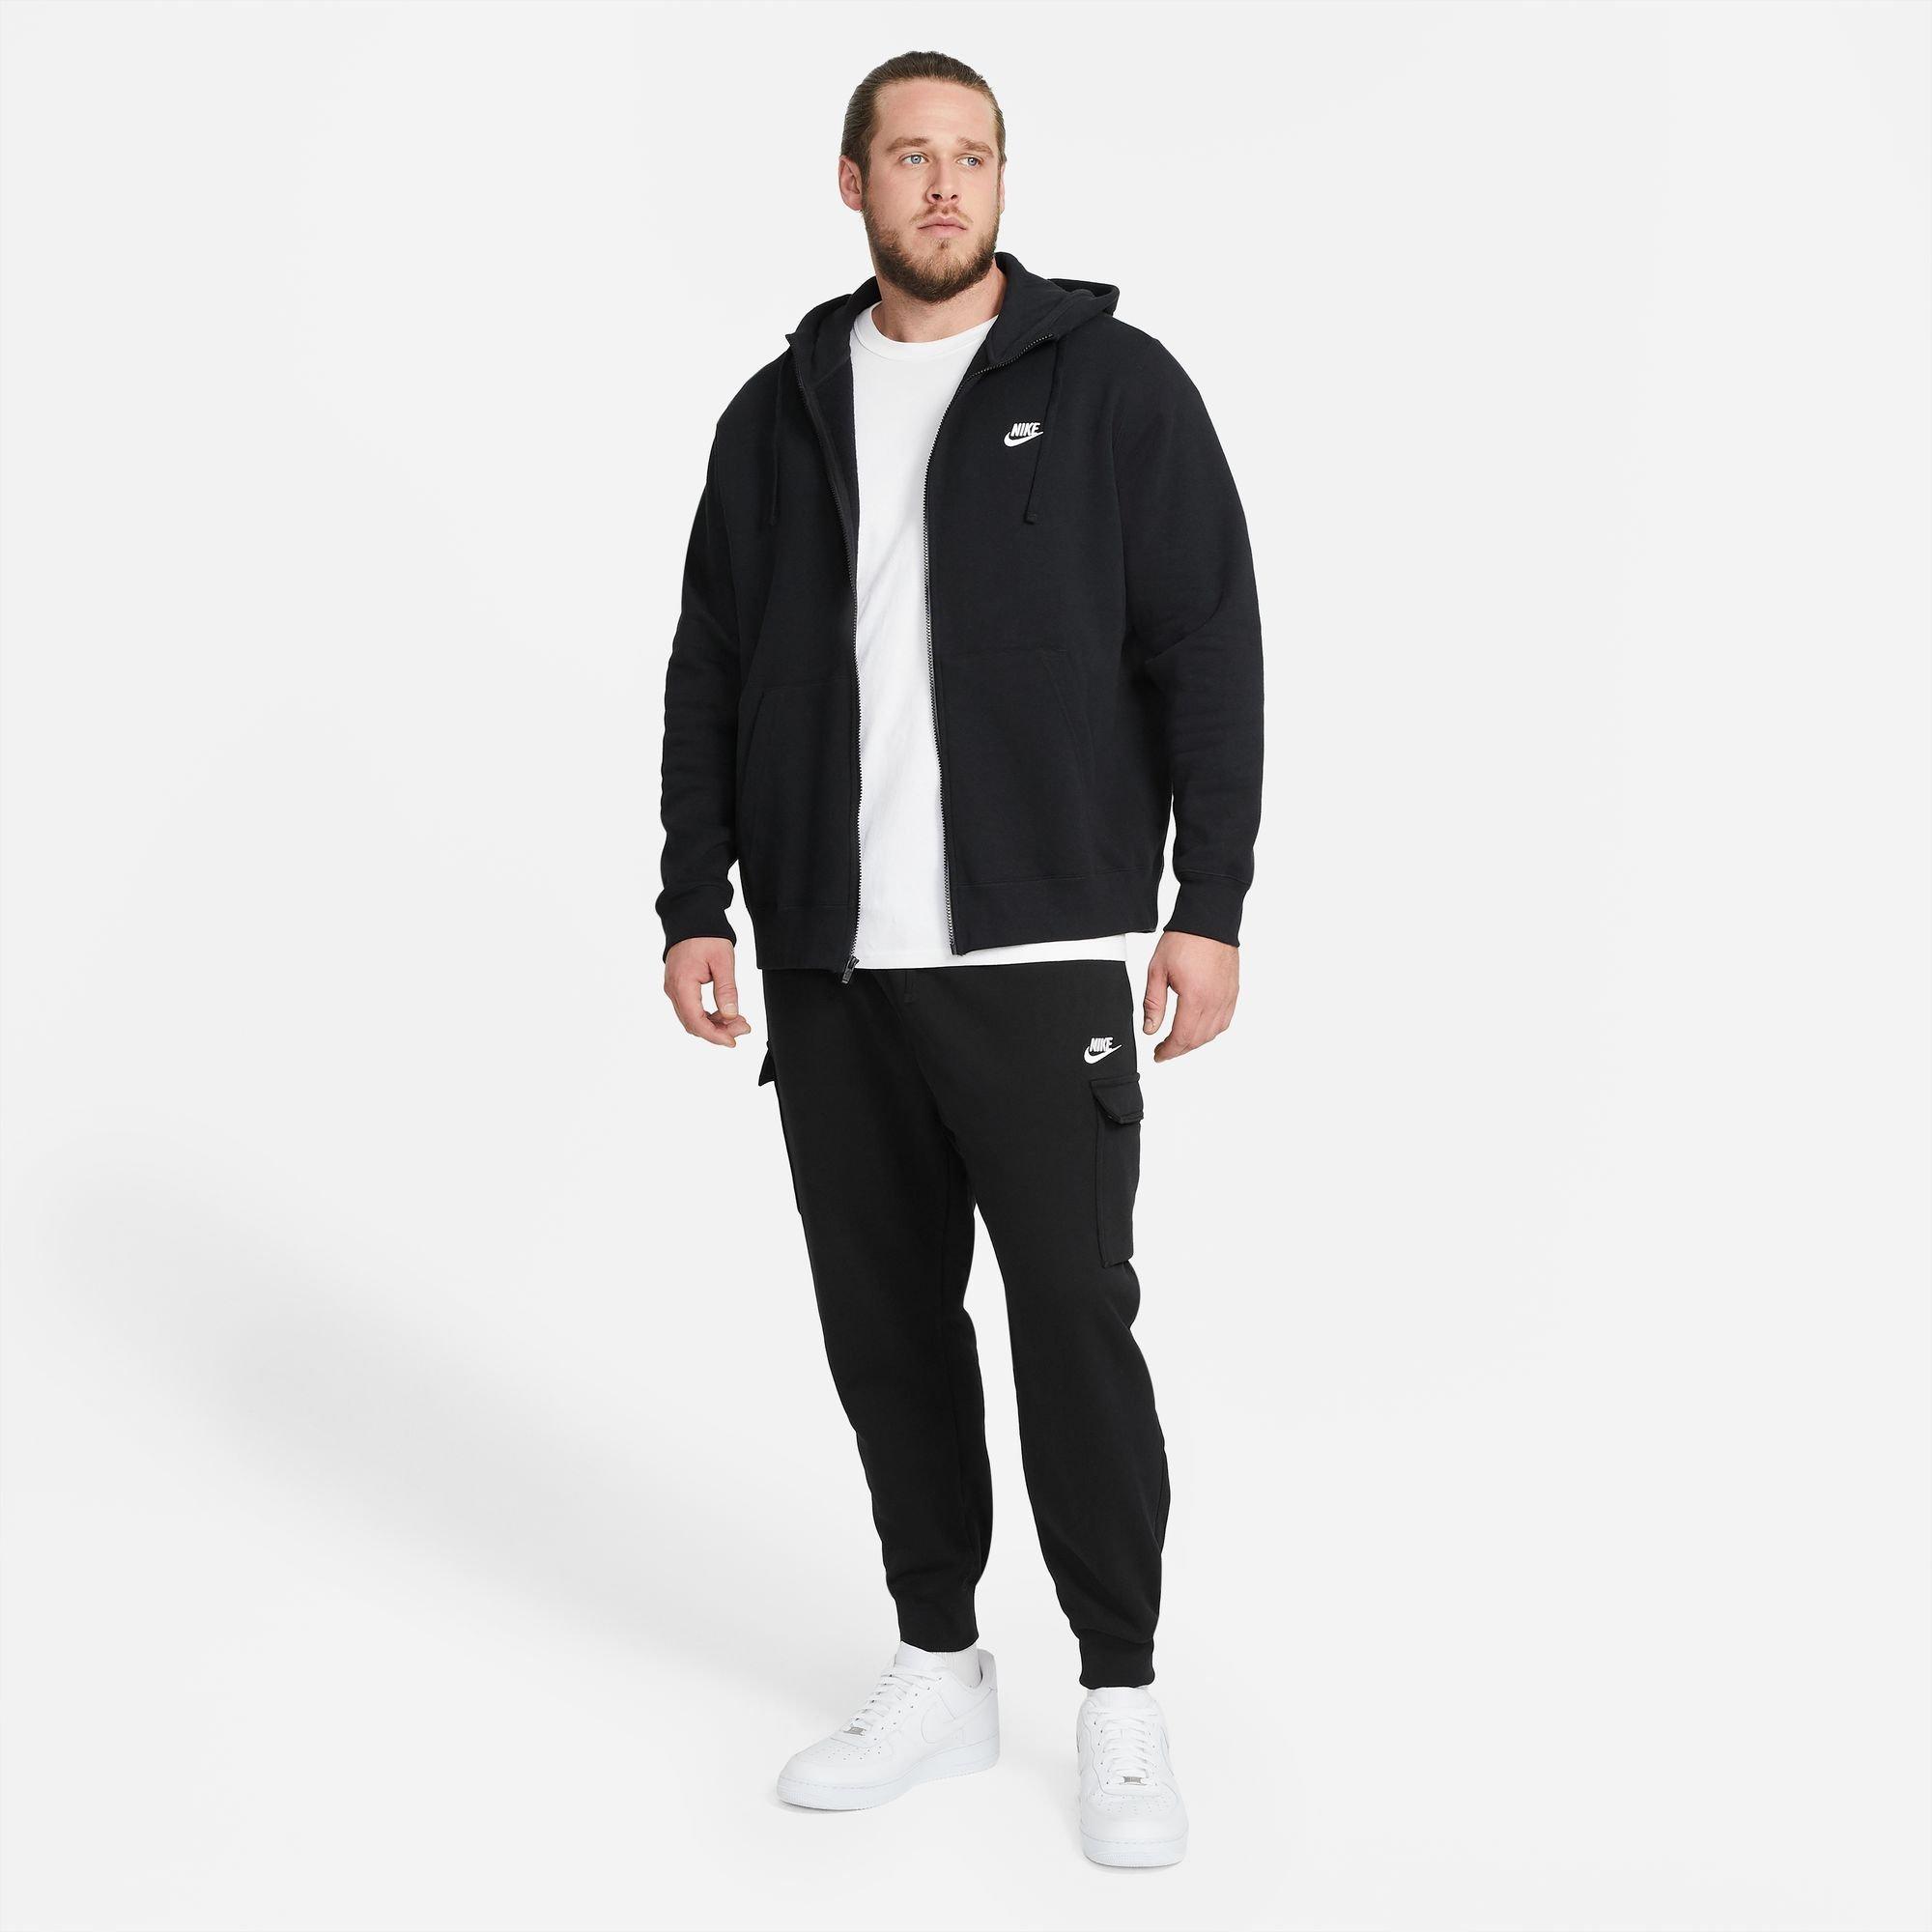 Nike Club Cargo sweatpants in khaki